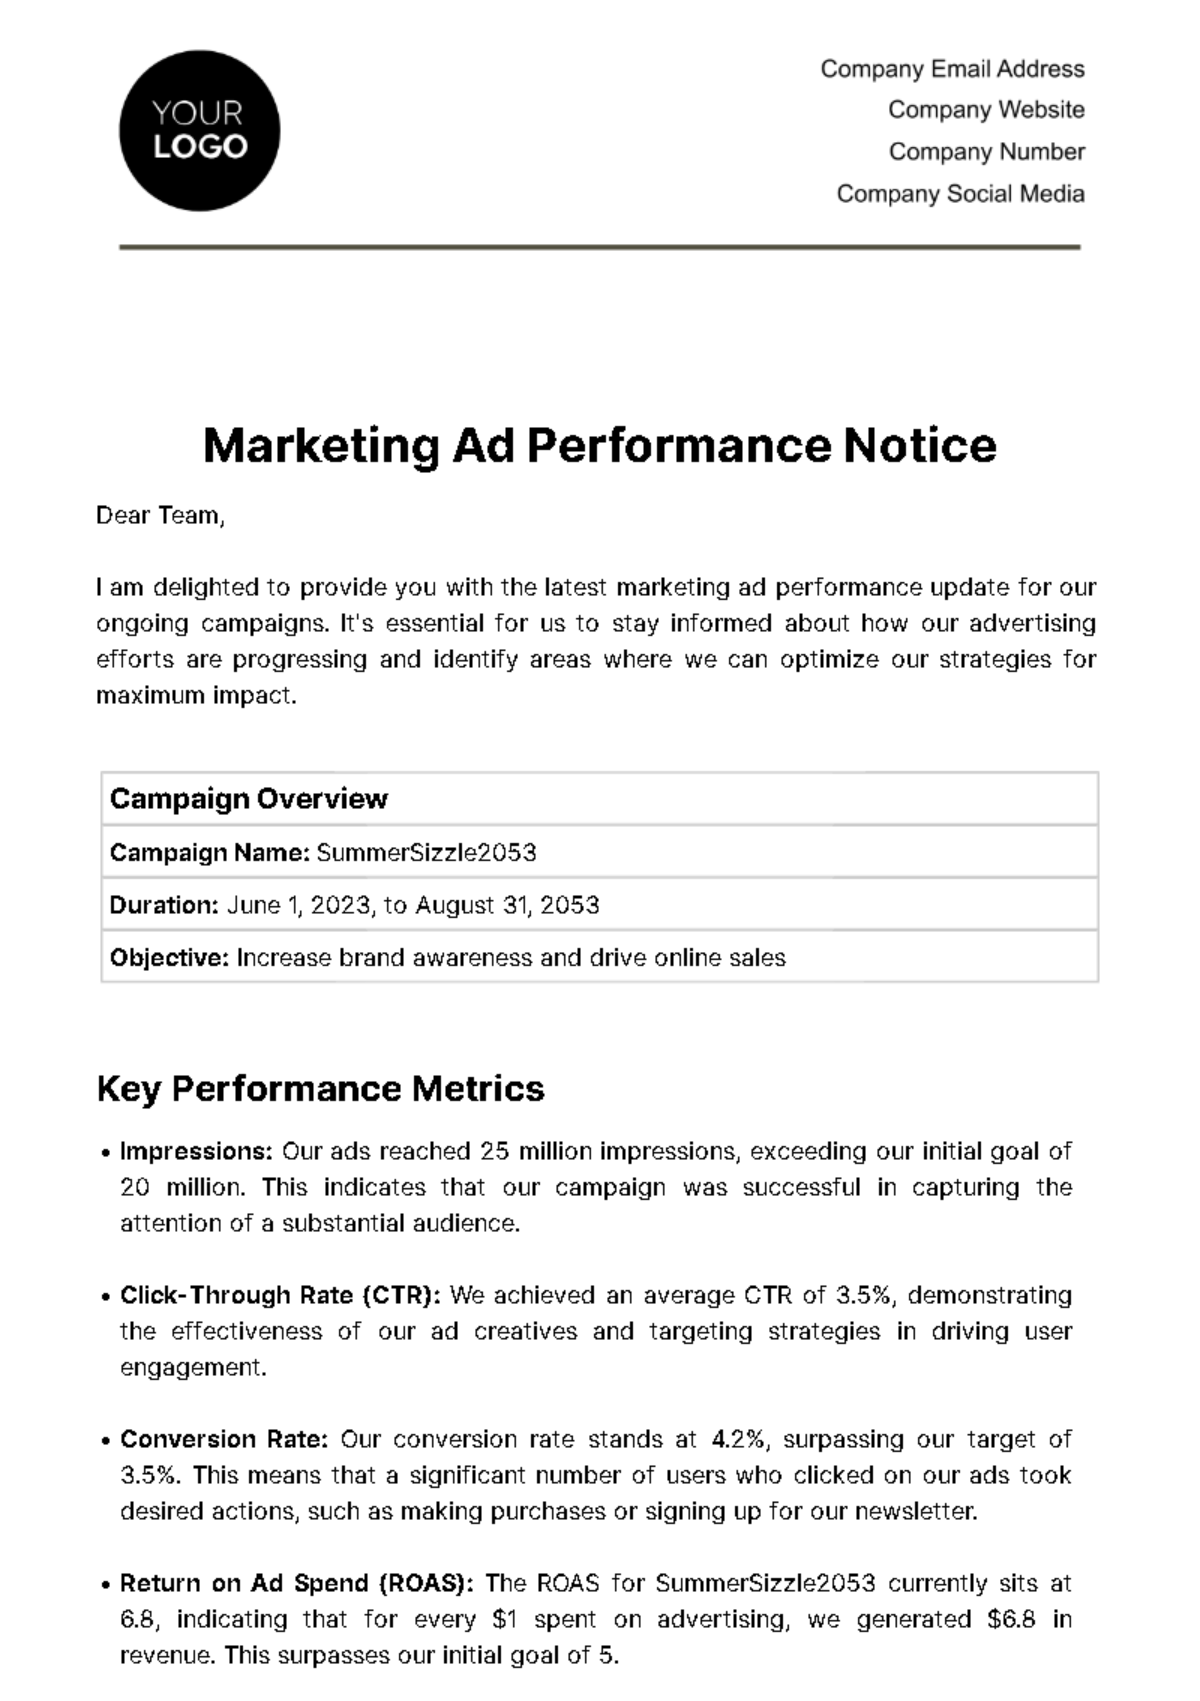 Marketing Ad Performance Notice Template